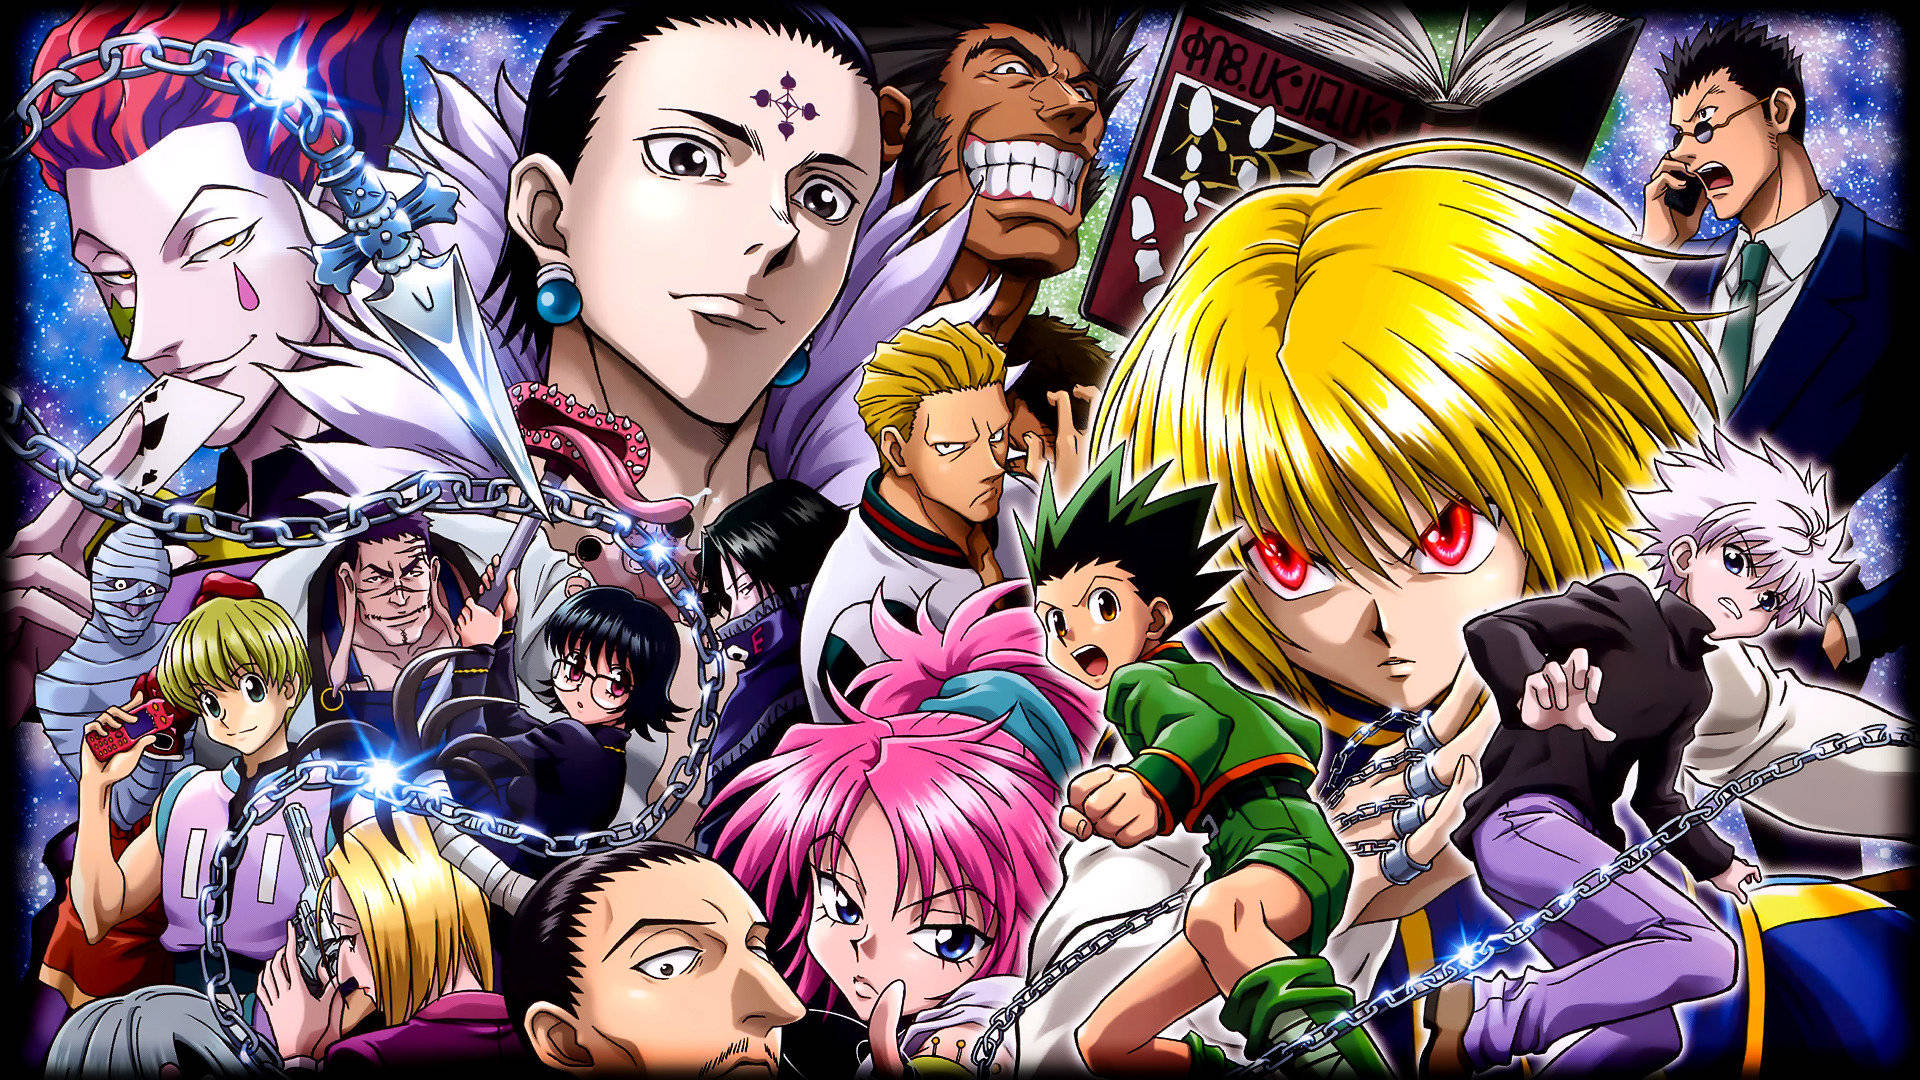 “The gang’s all here! Meet Gon, Killua, Leorio, Kurapika, and Hisoka, the main cast of Hunter X Hunter.” Wallpaper